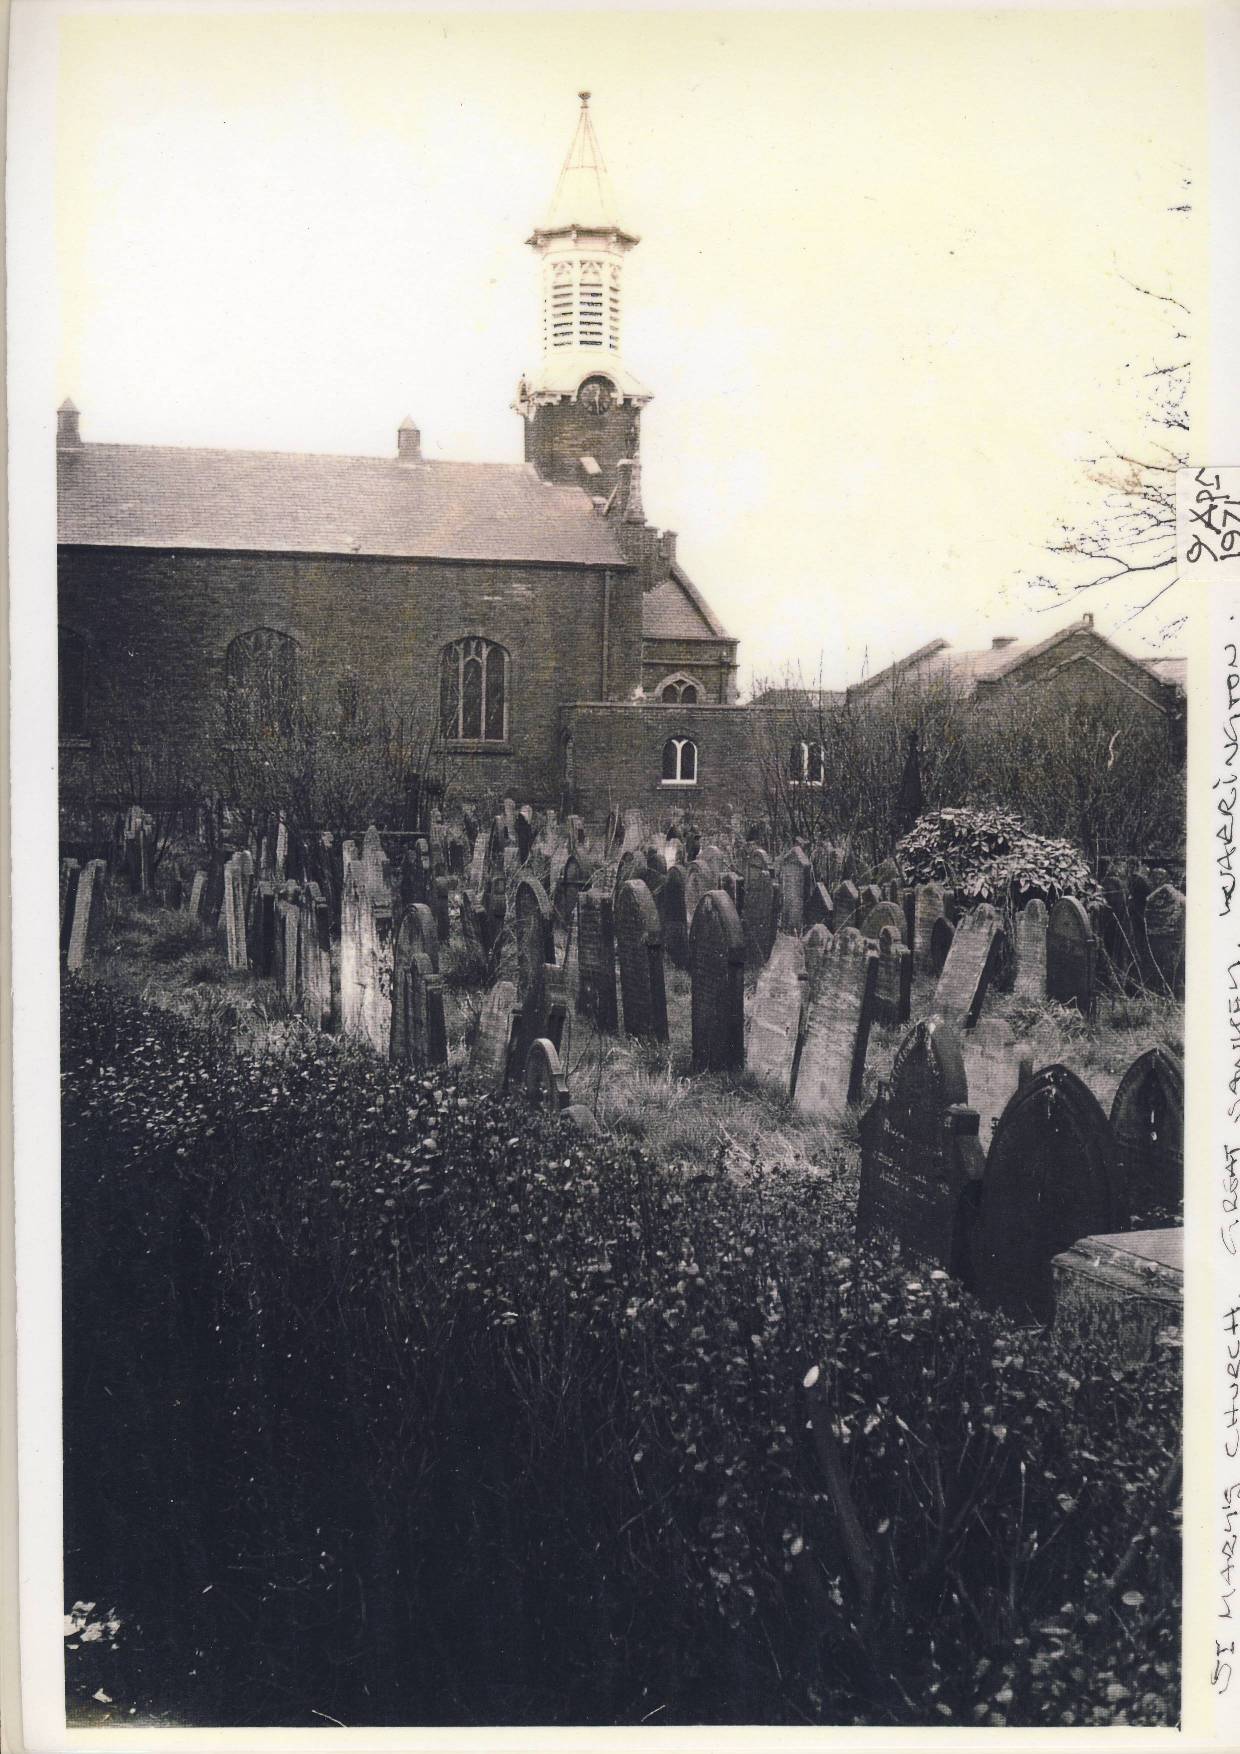 St Mary Great Sankey rear graveyard 1971 - photo 3 of 4